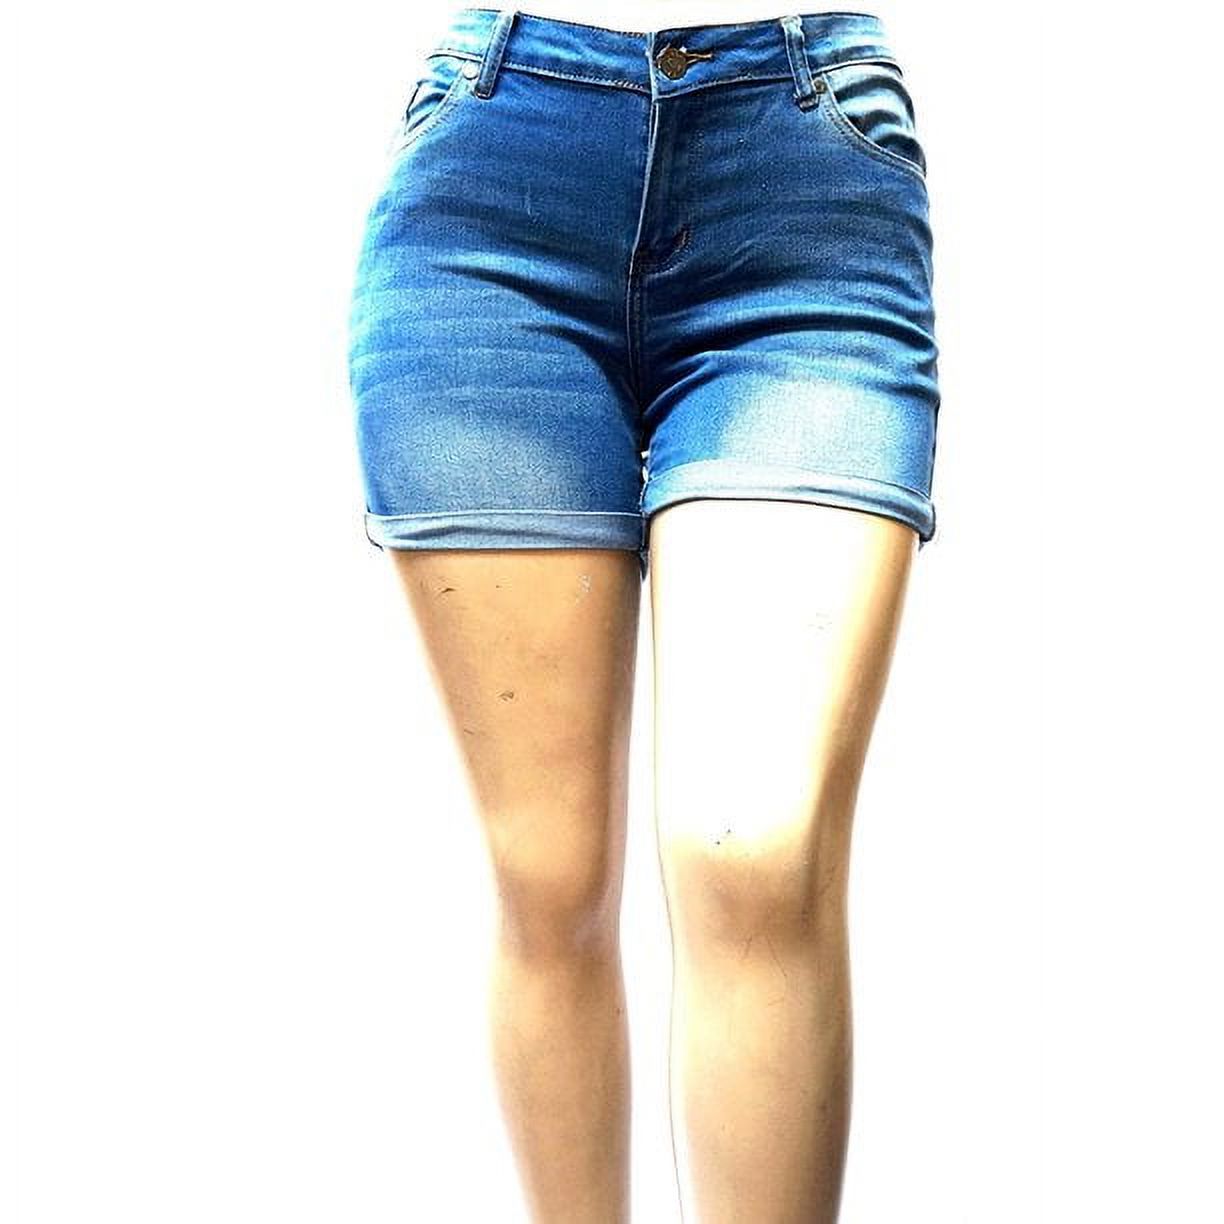 1826 Jeans Women's Plus Size Cuff Rolled Capri Bermuda Short Curvy Denim Jean - 2799 - image 1 of 3